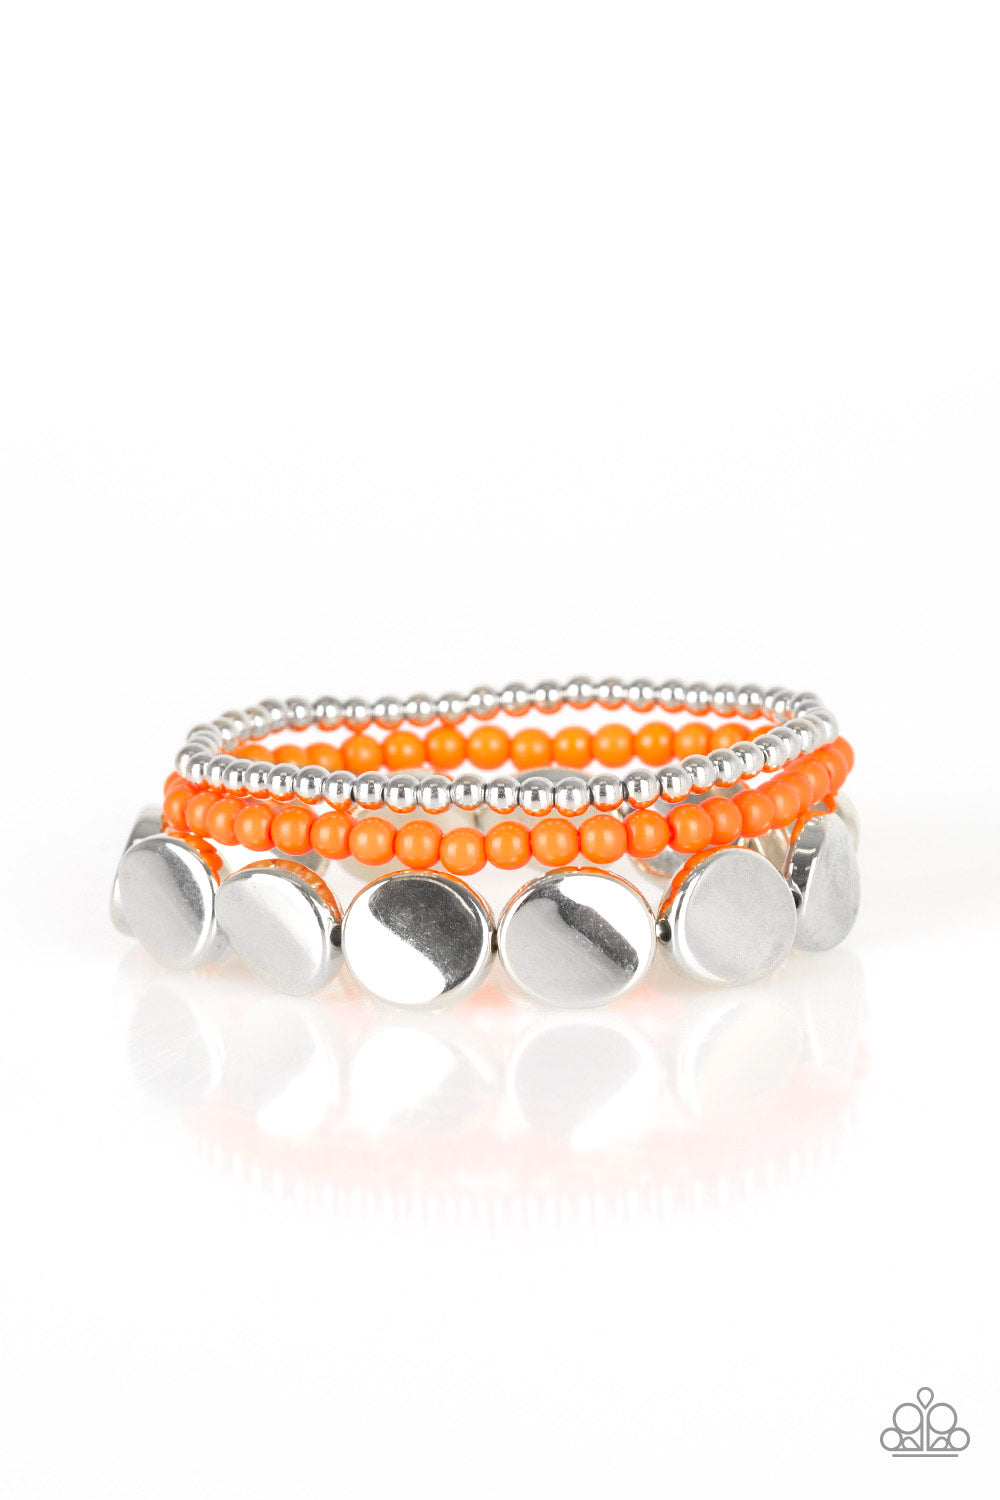 Beyond The Basics - orange bracelet 700